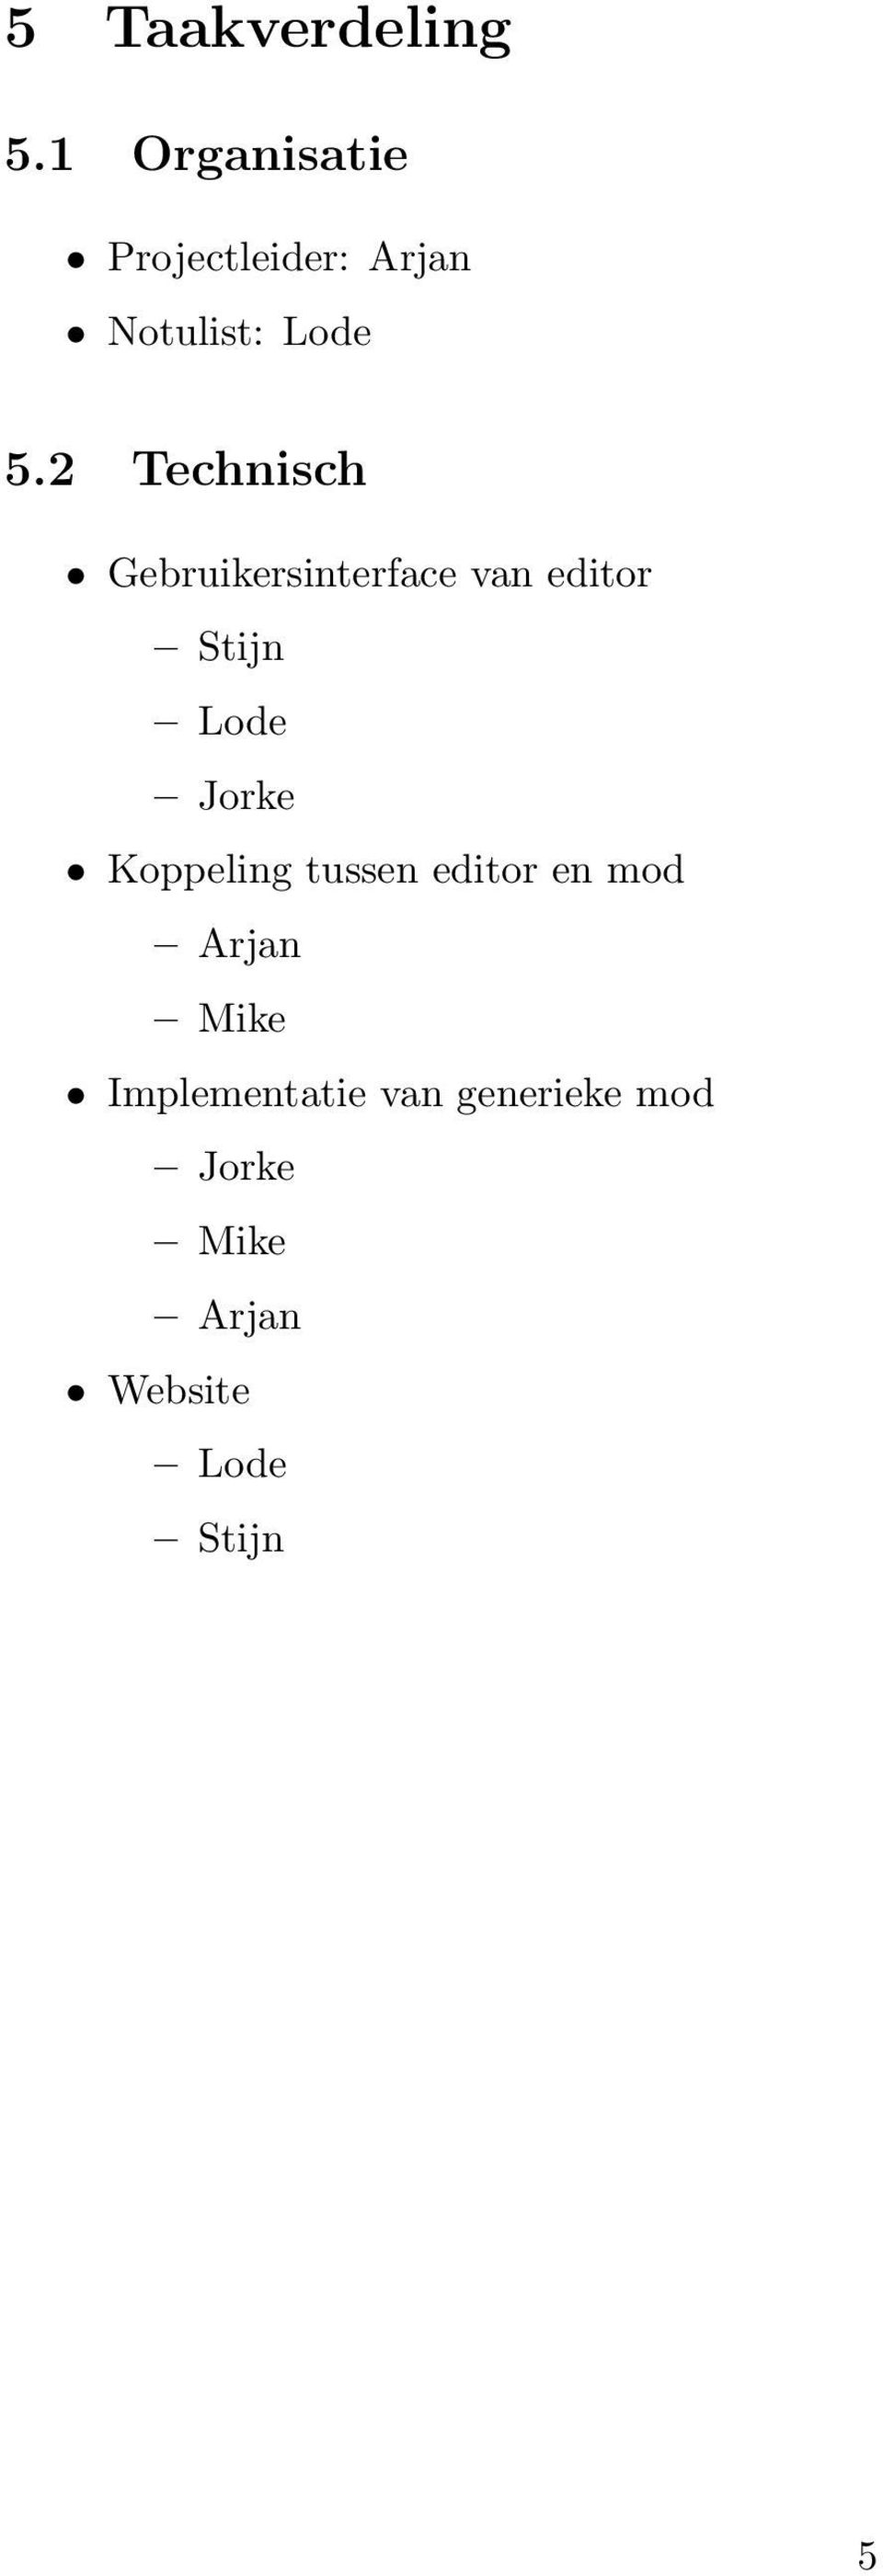 2 Technisch Gebruikersinterface van editor Stijn Lode Jorke